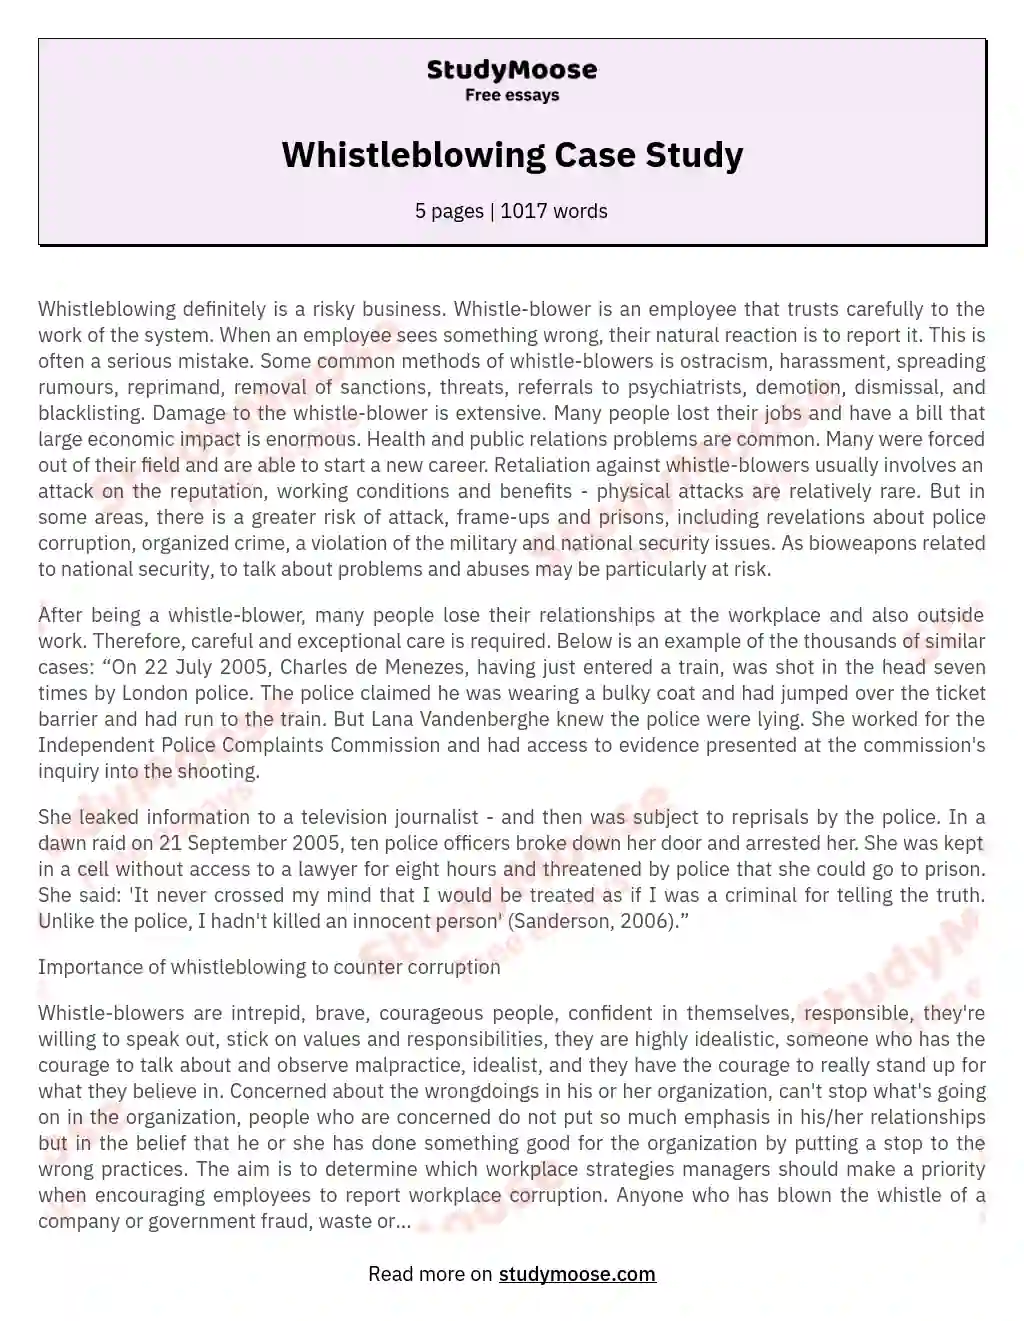 Whistleblowing Case Study essay